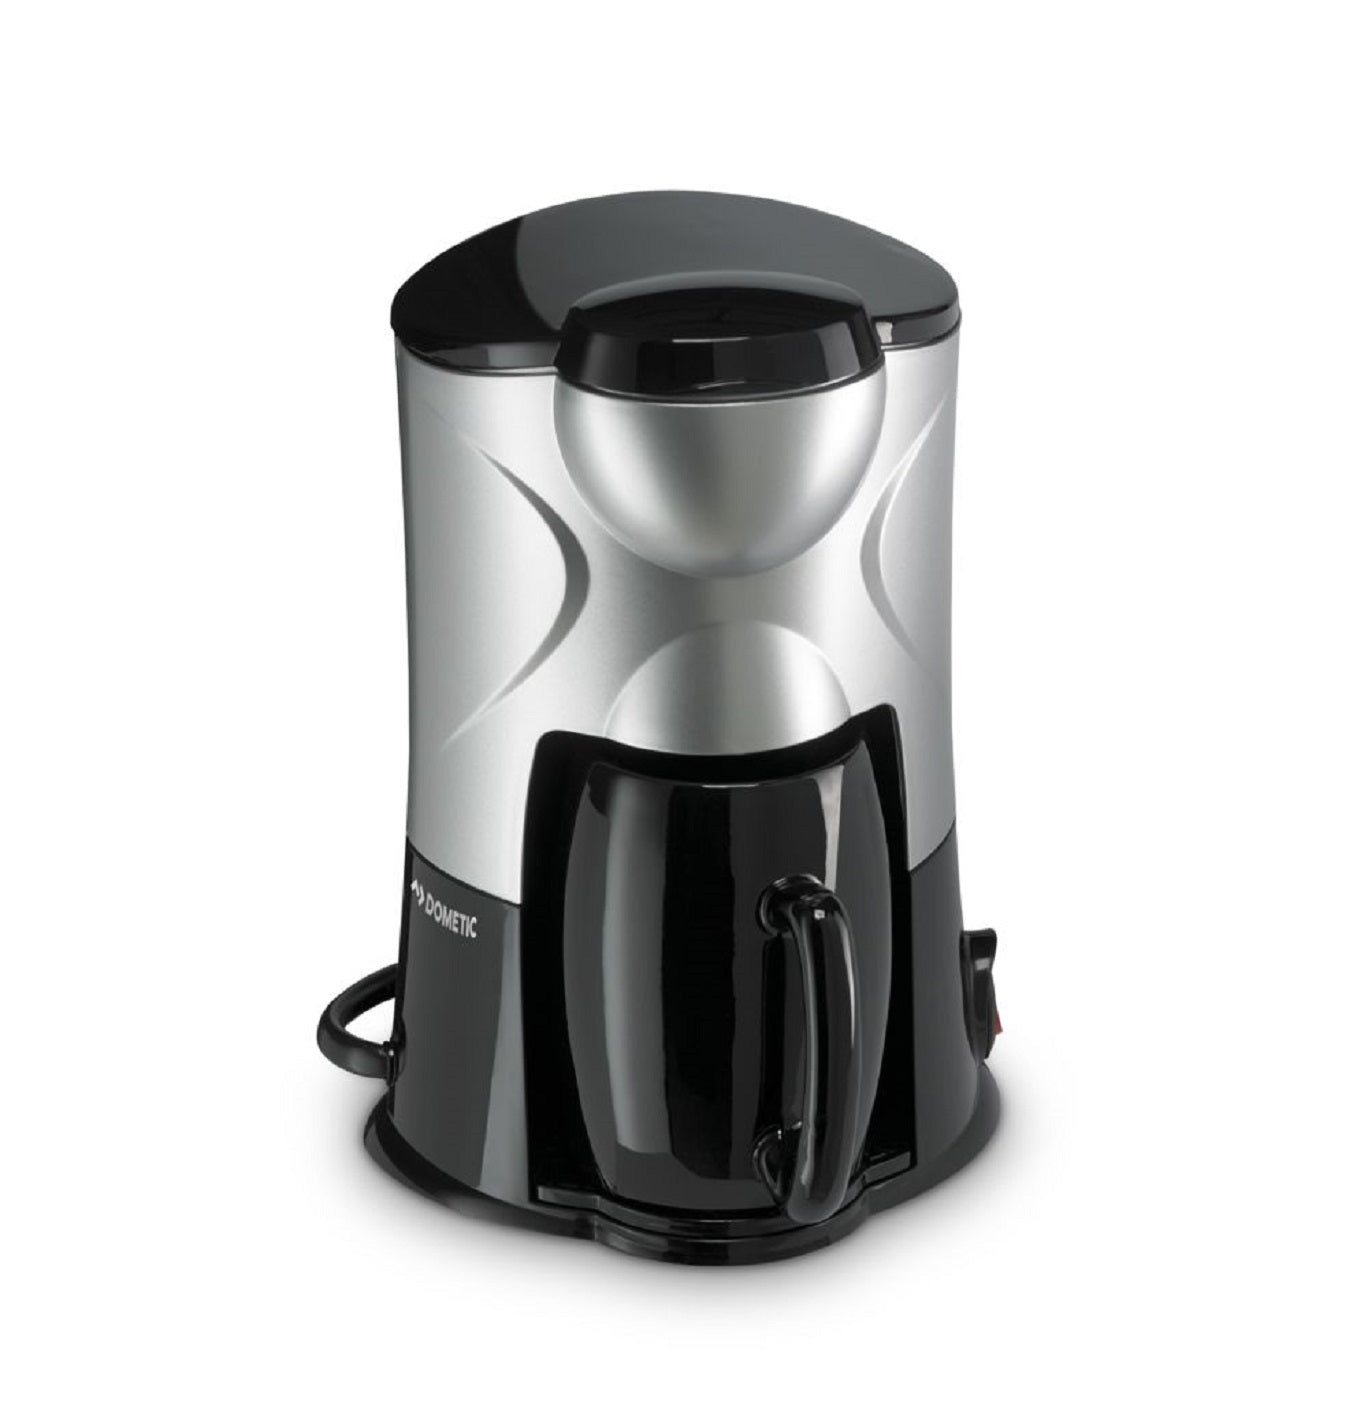 Dometic 12V PerfectCup MC 01 Single Cup Coffee Maker